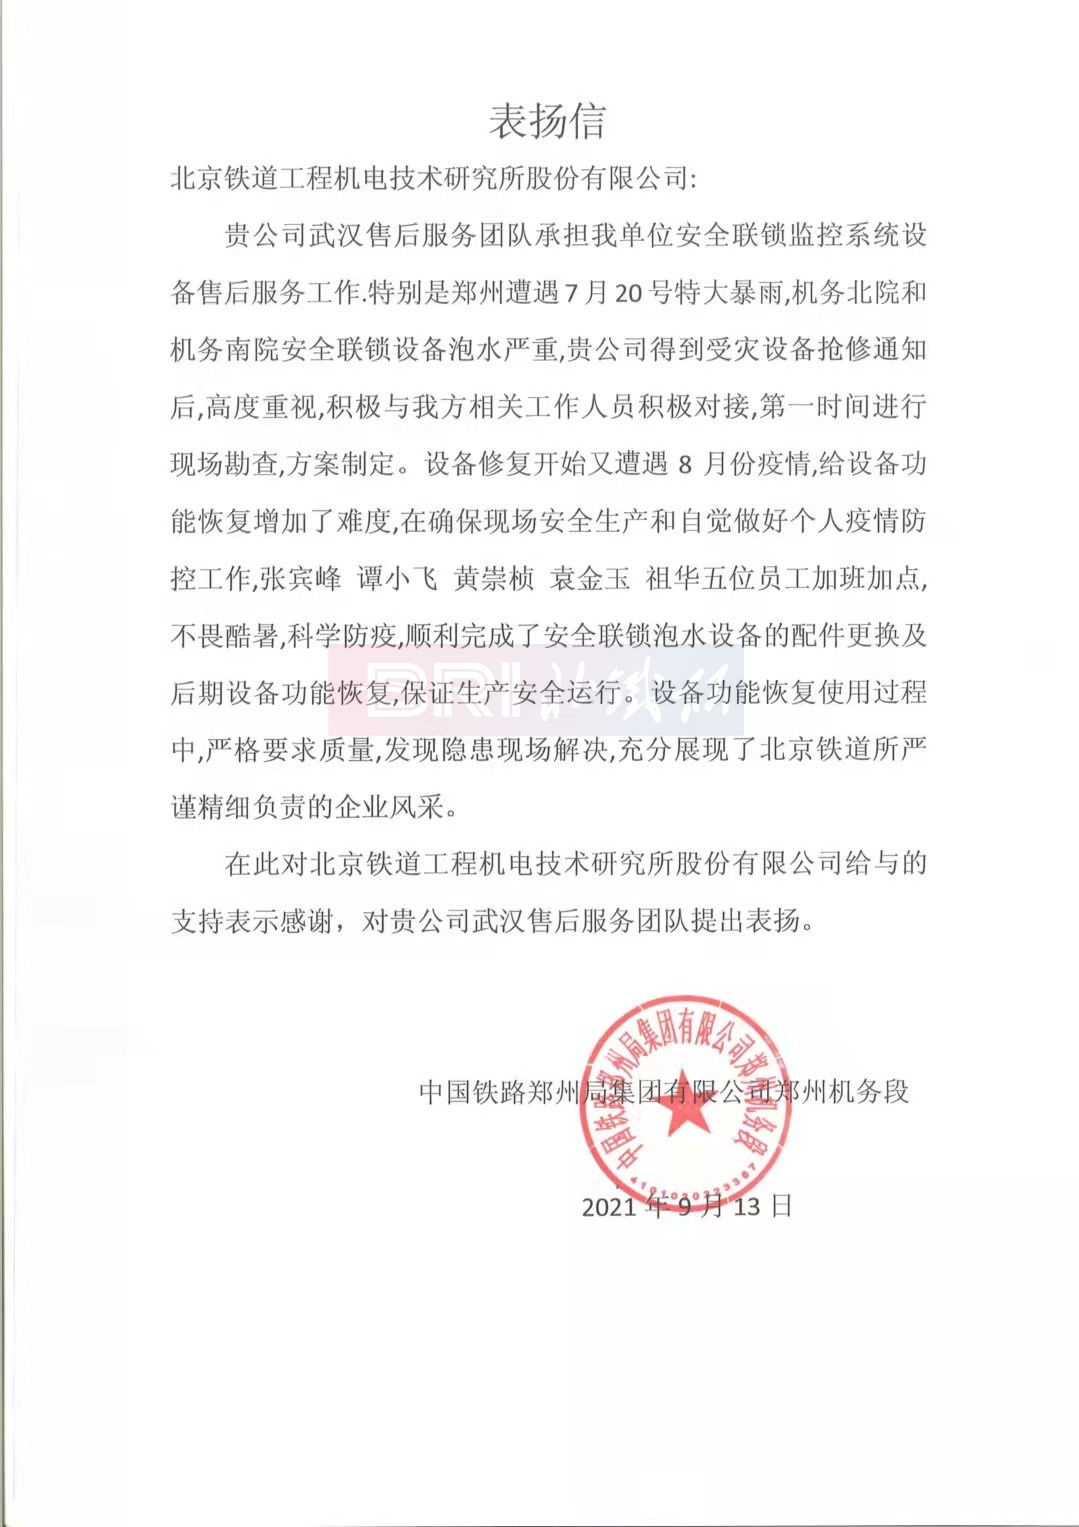 The commendation letter from Zhengzhou Locomotive Depot